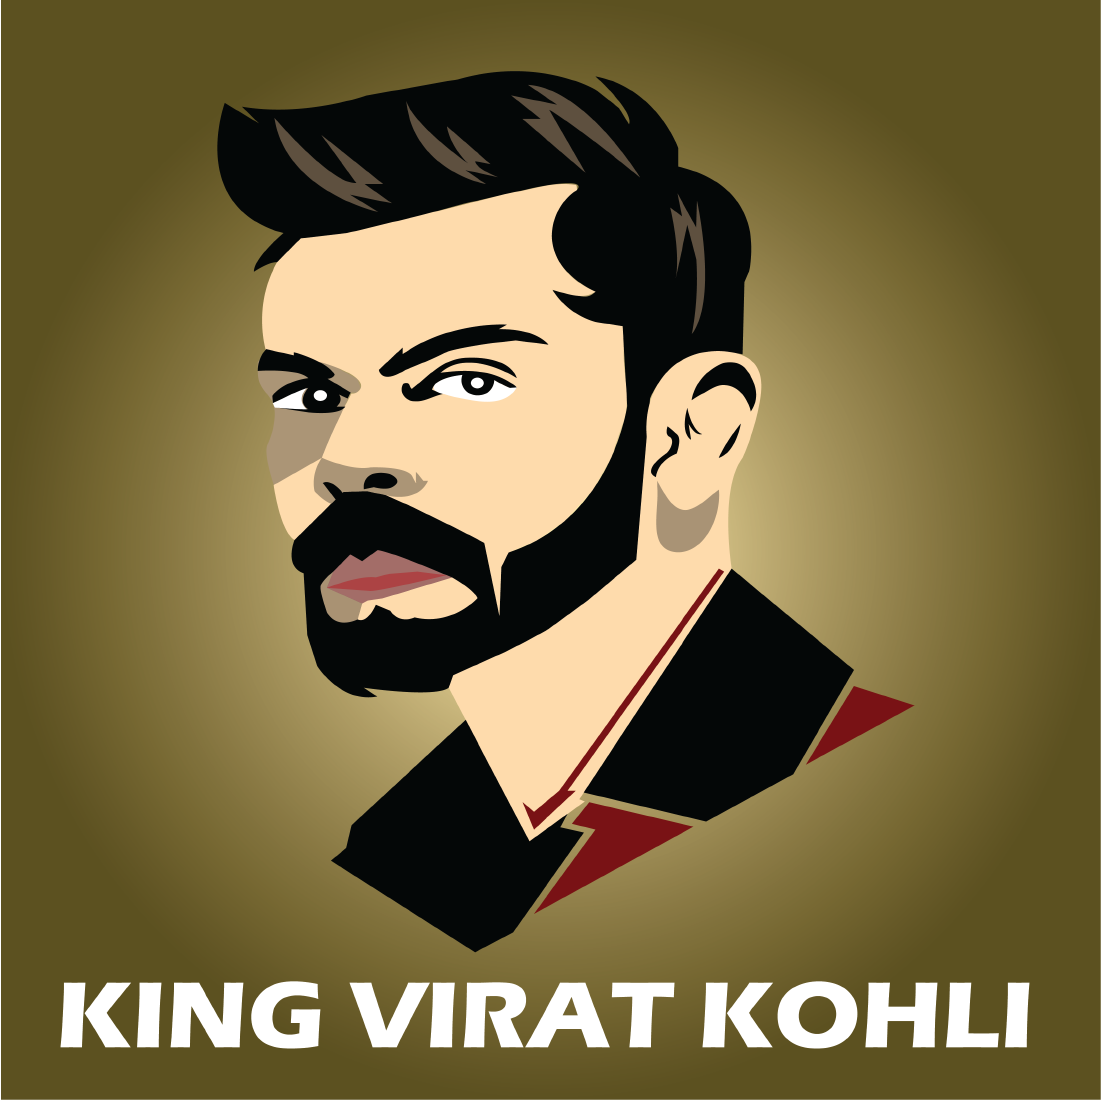 Virat Kohli Art preview image.